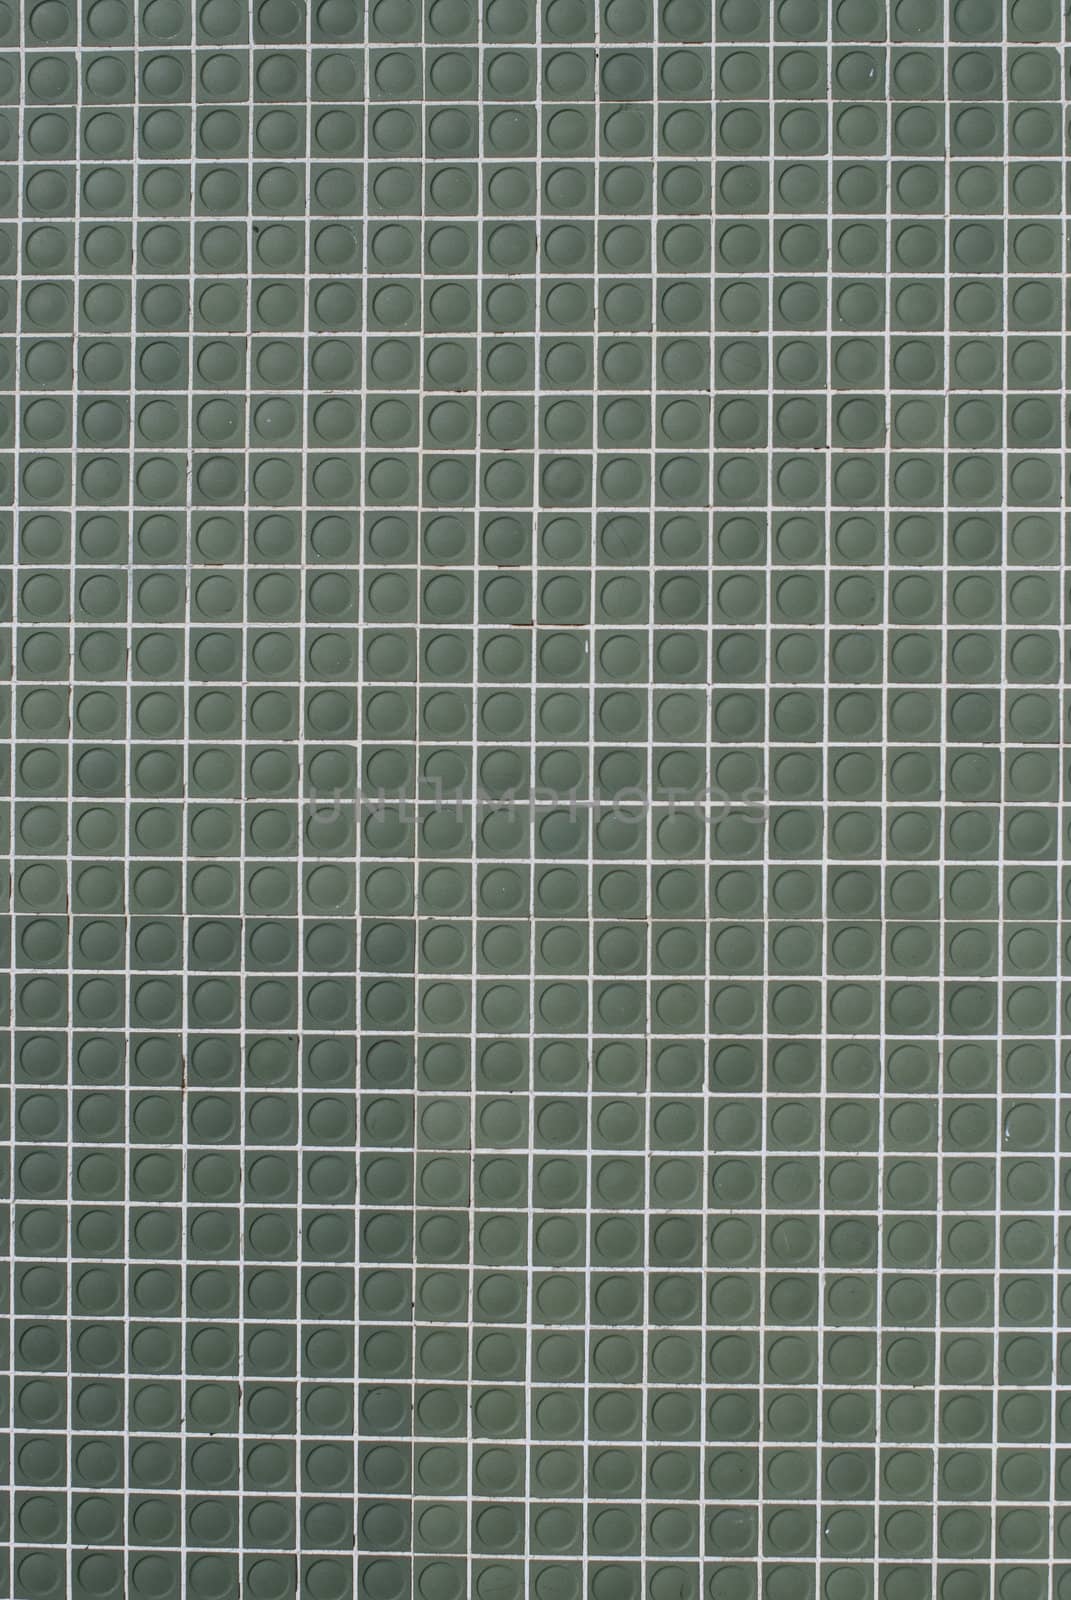 Portuguese glazed tiles 214 by homydesign